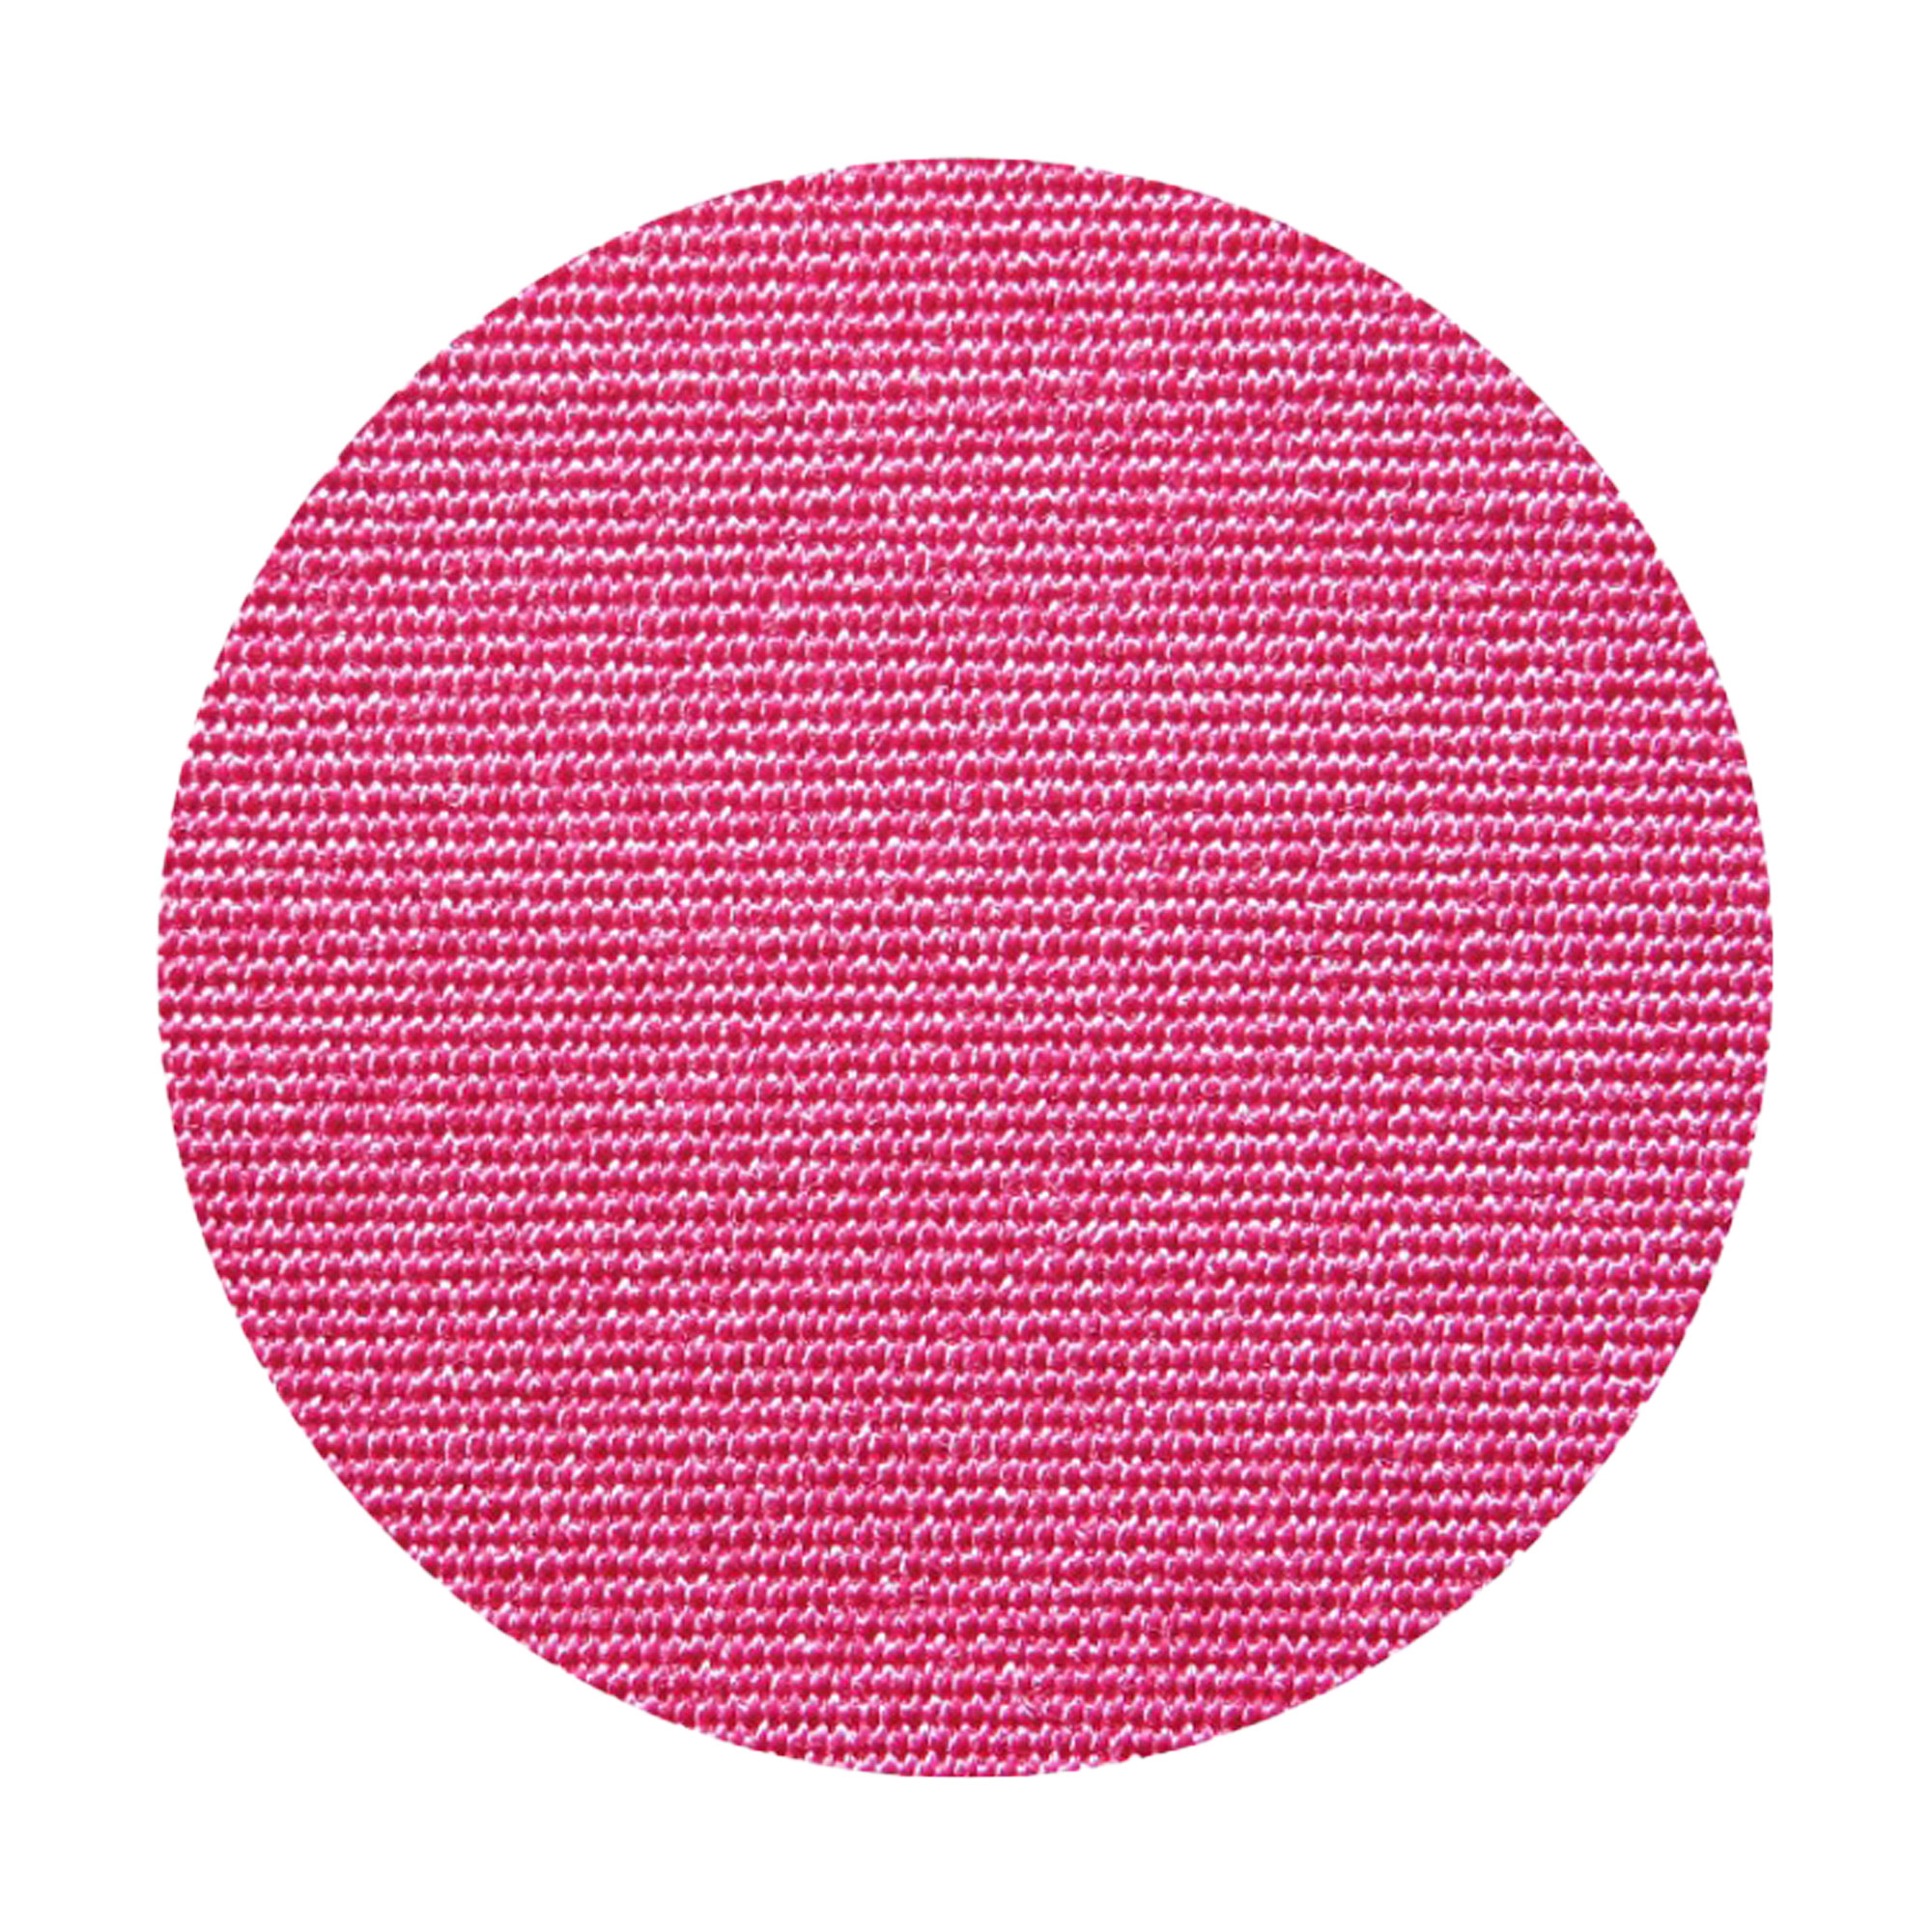 Kinesiologie Tape 5 cm x 5 m pink